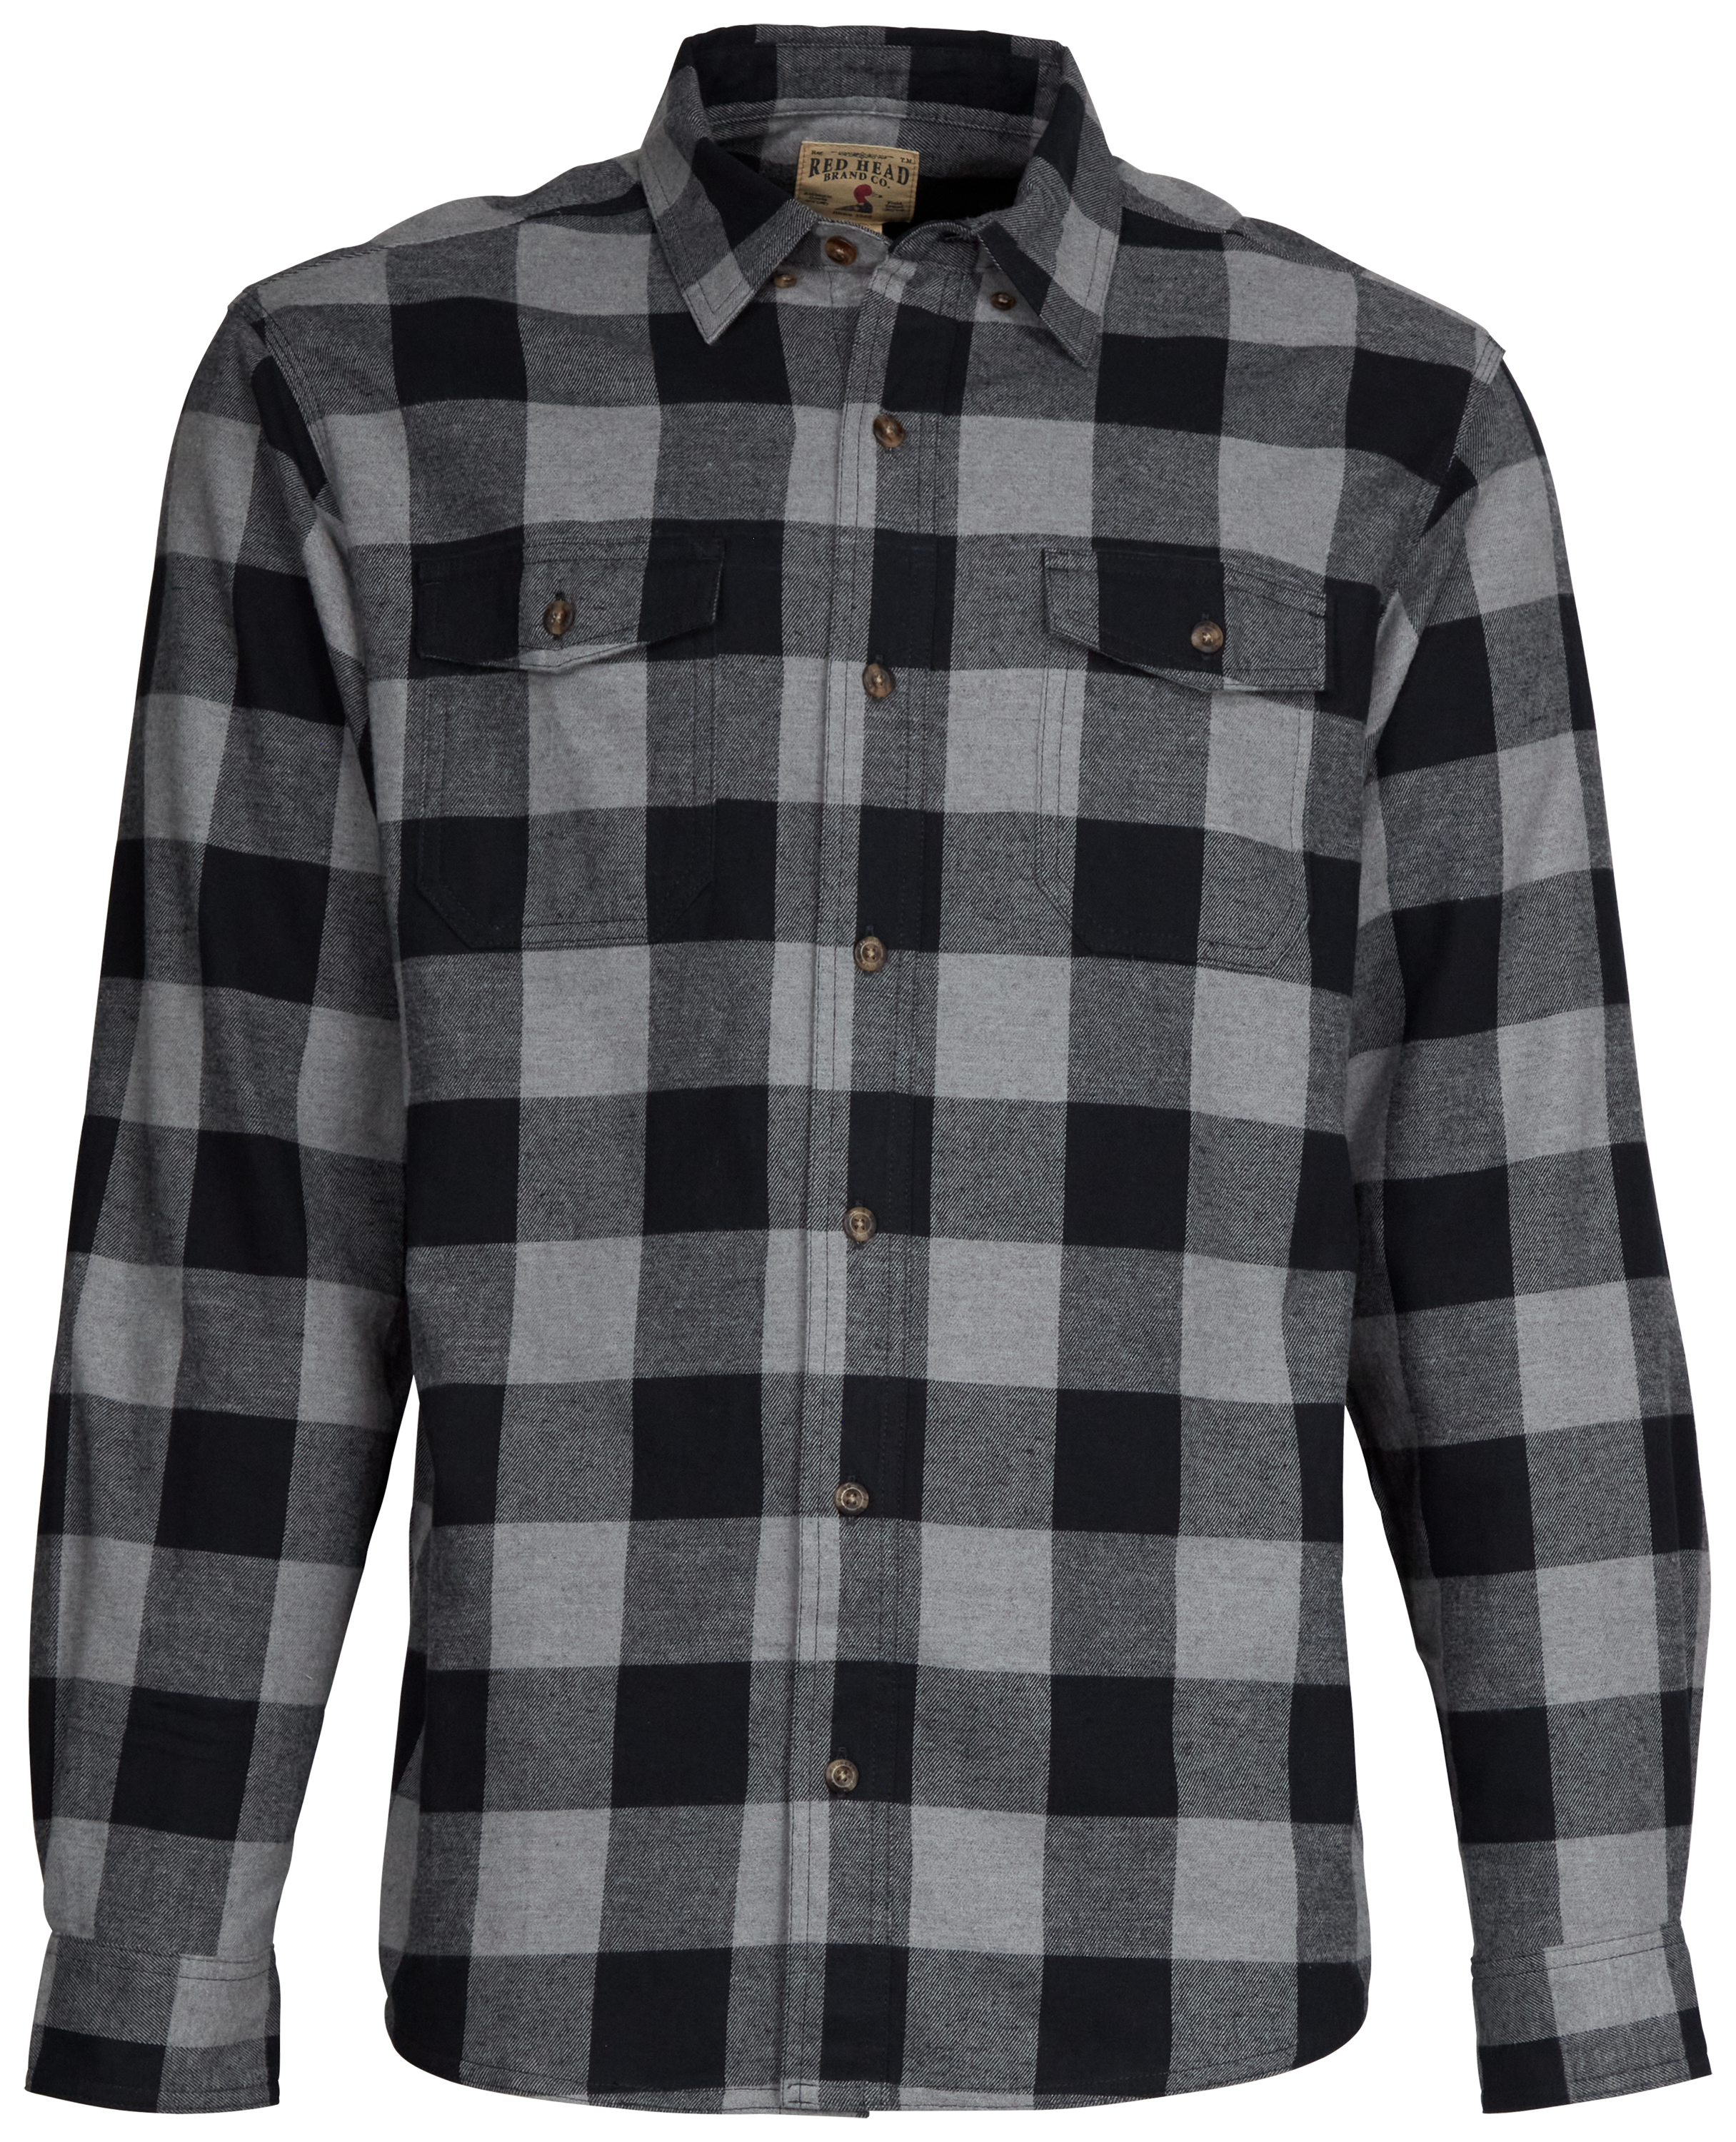 RedHead Buffalo Creek Flannel Long-Sleeve Shirt for Men - Black/Gray - M